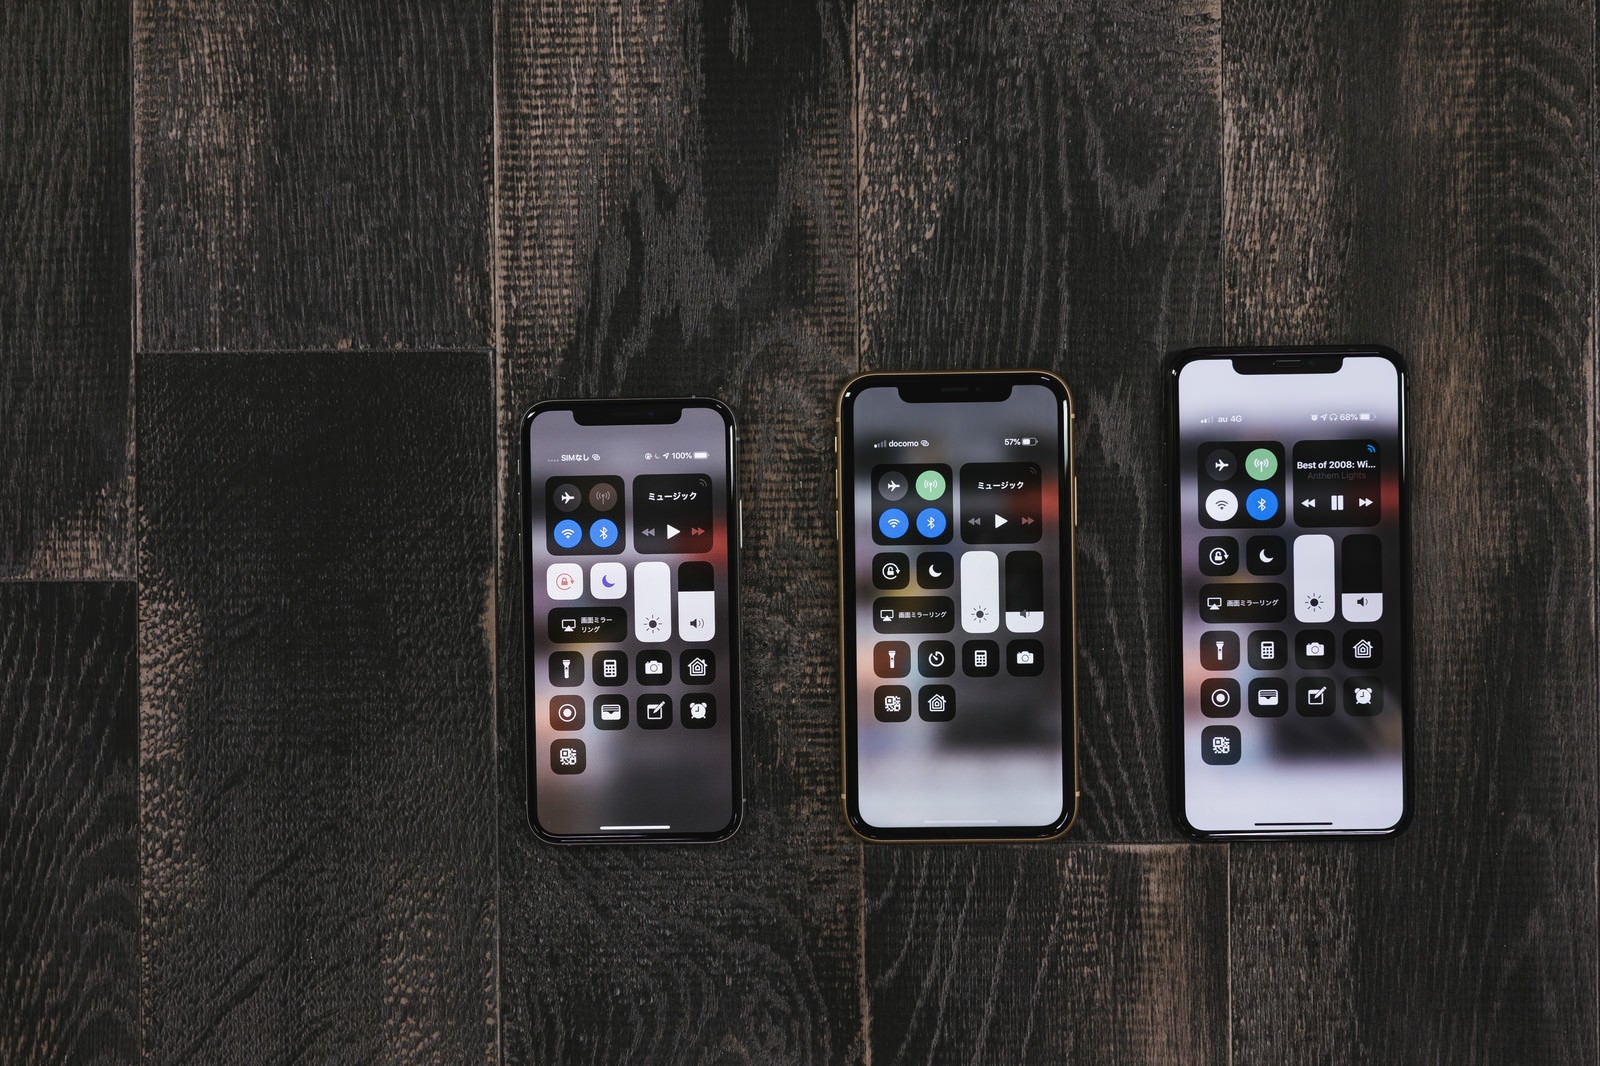 「iPhone XS、XR、XS Max のディスプレイ比較」の写真